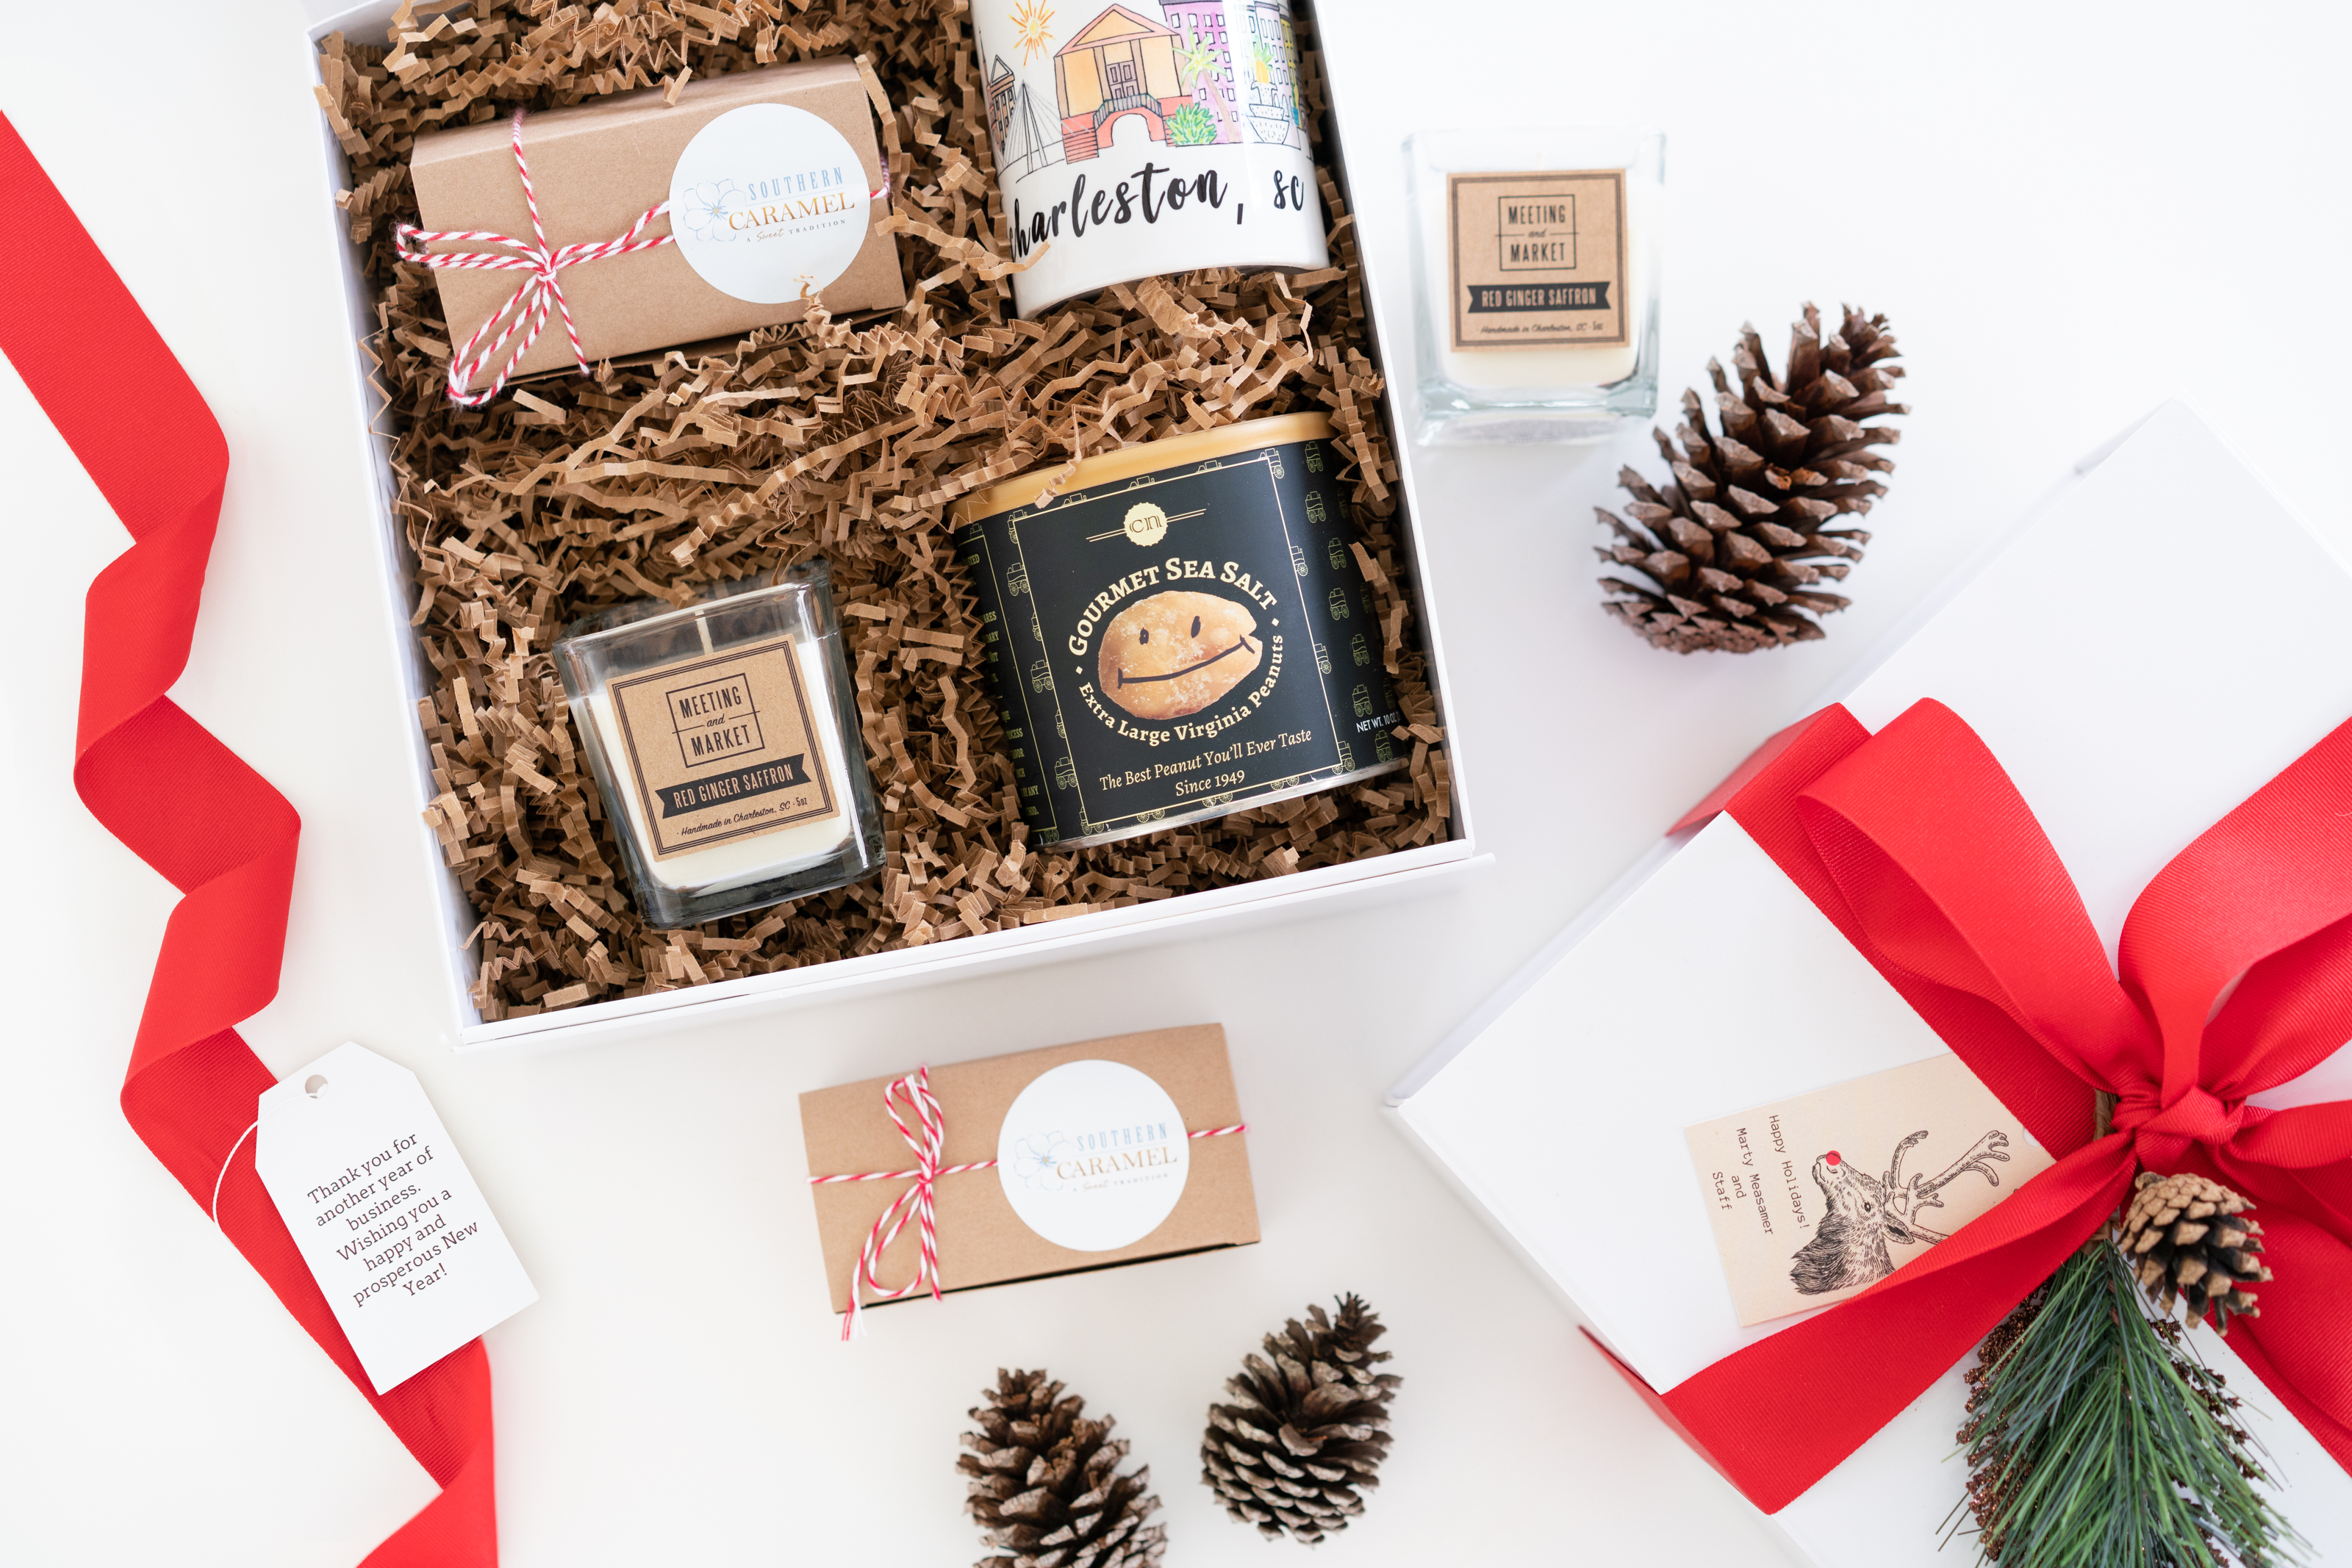 A Christmas-themed custom gift box